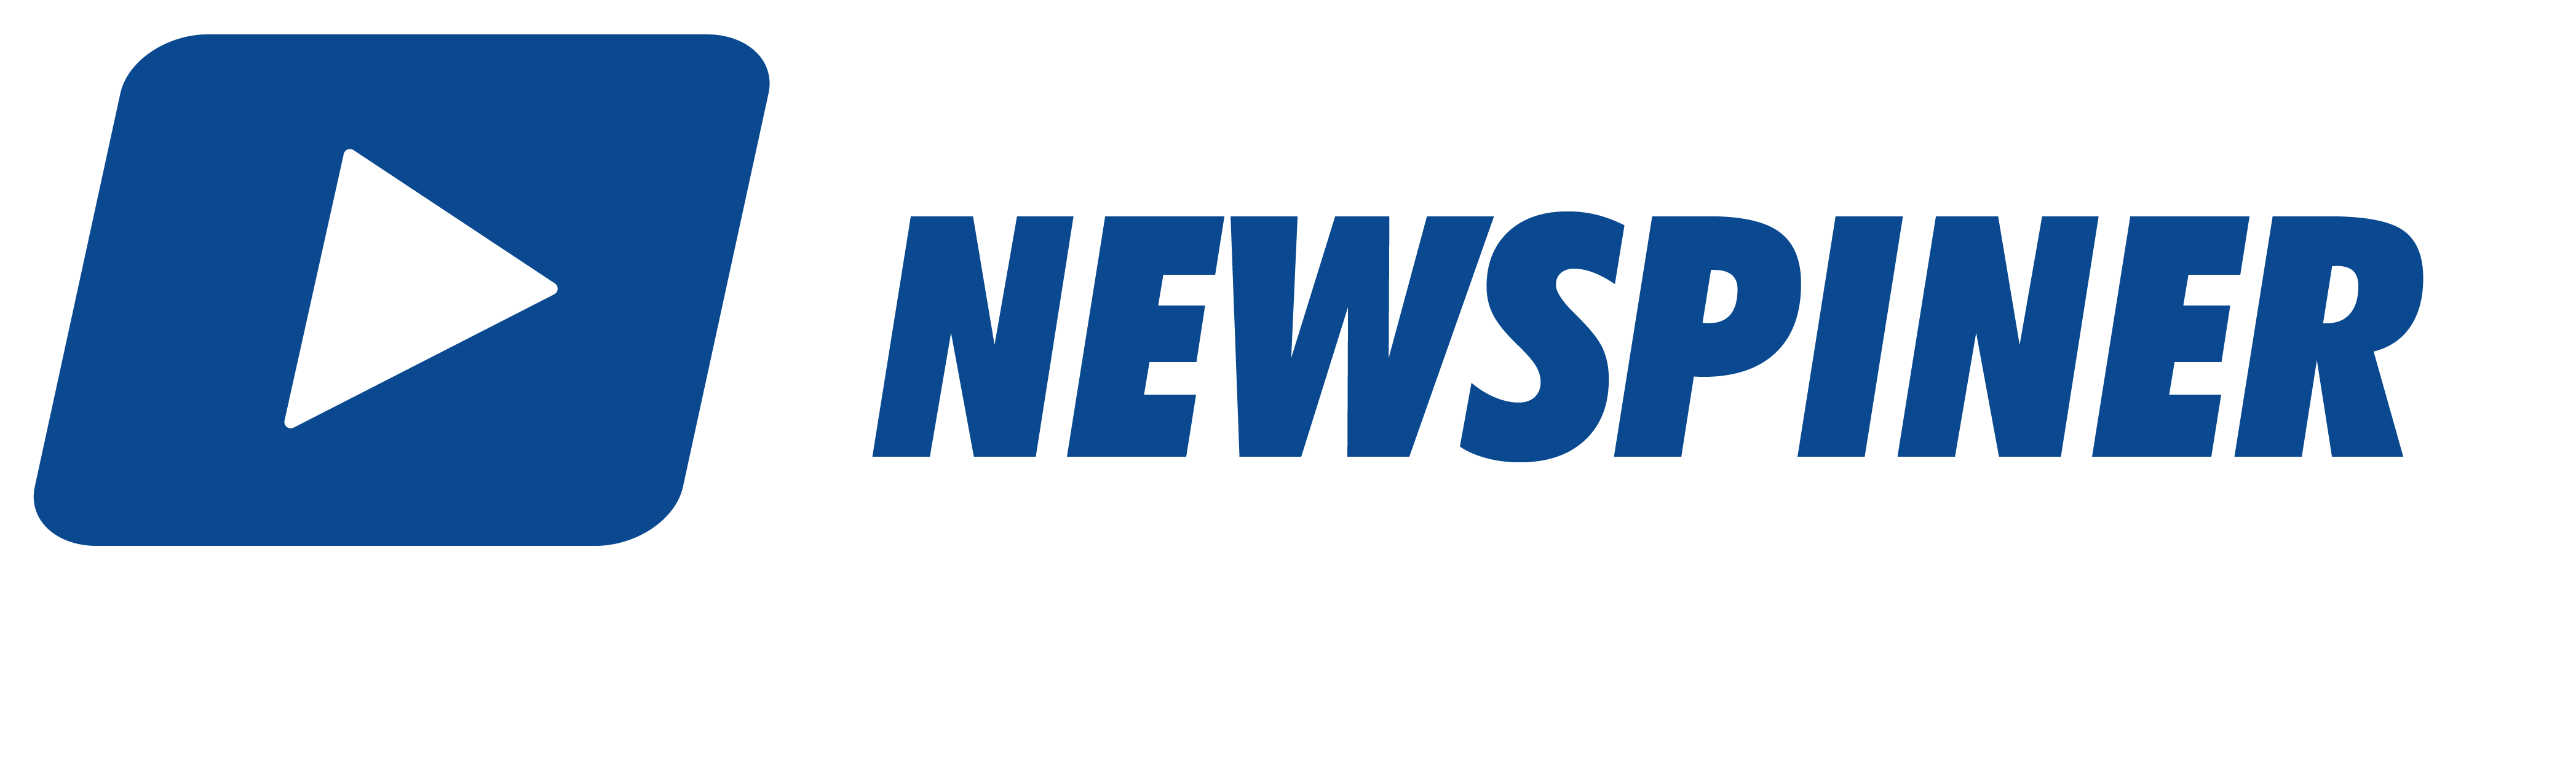 Newspiner logo